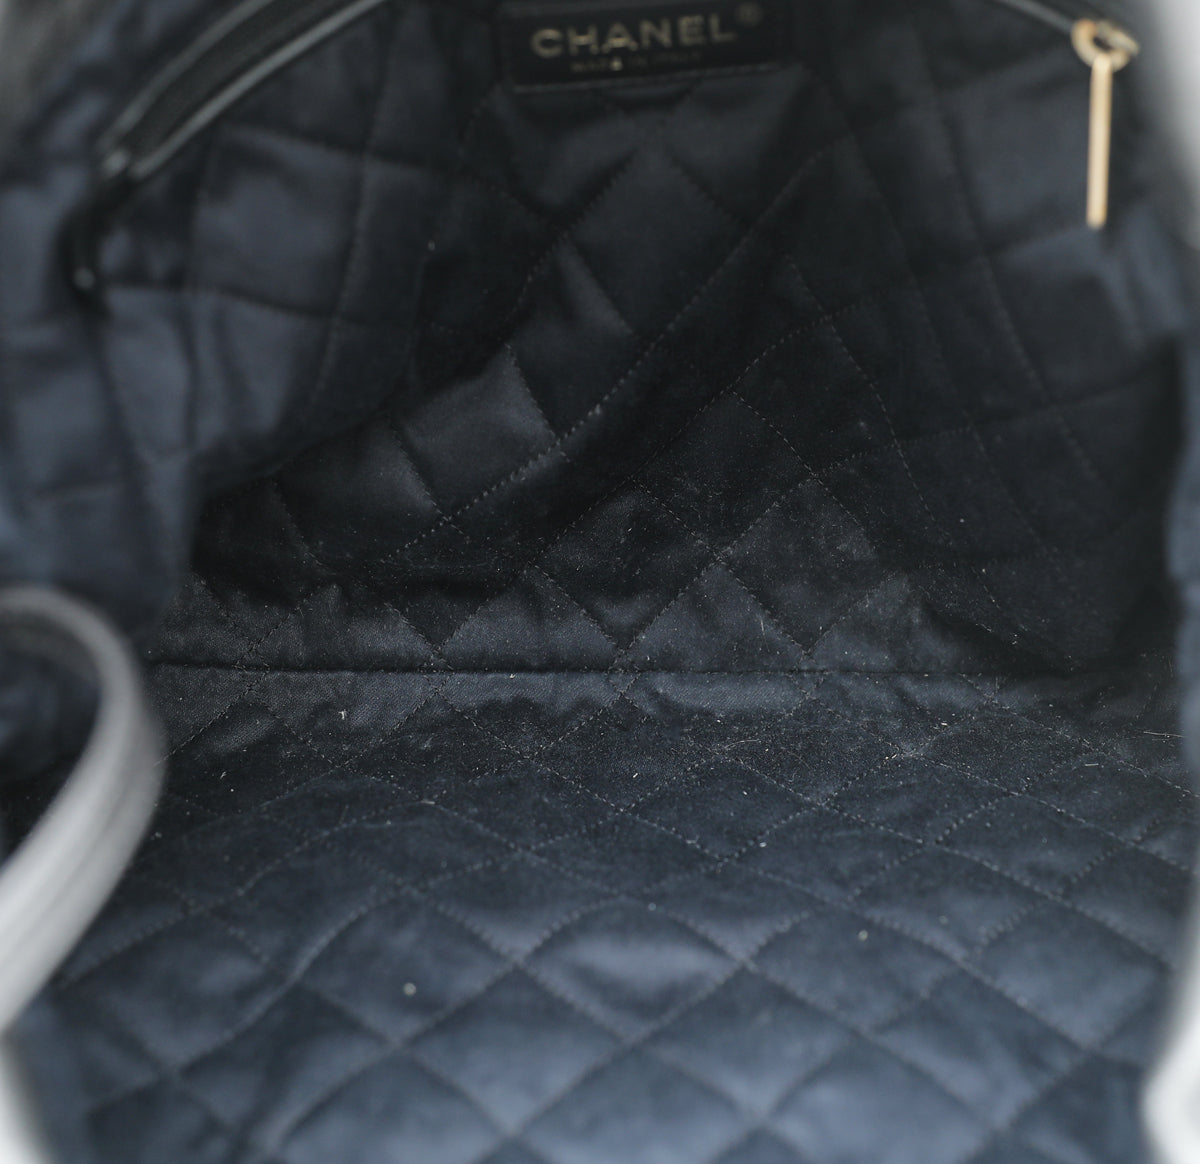 Chanel Metallic Grey 22 Quilt Bag